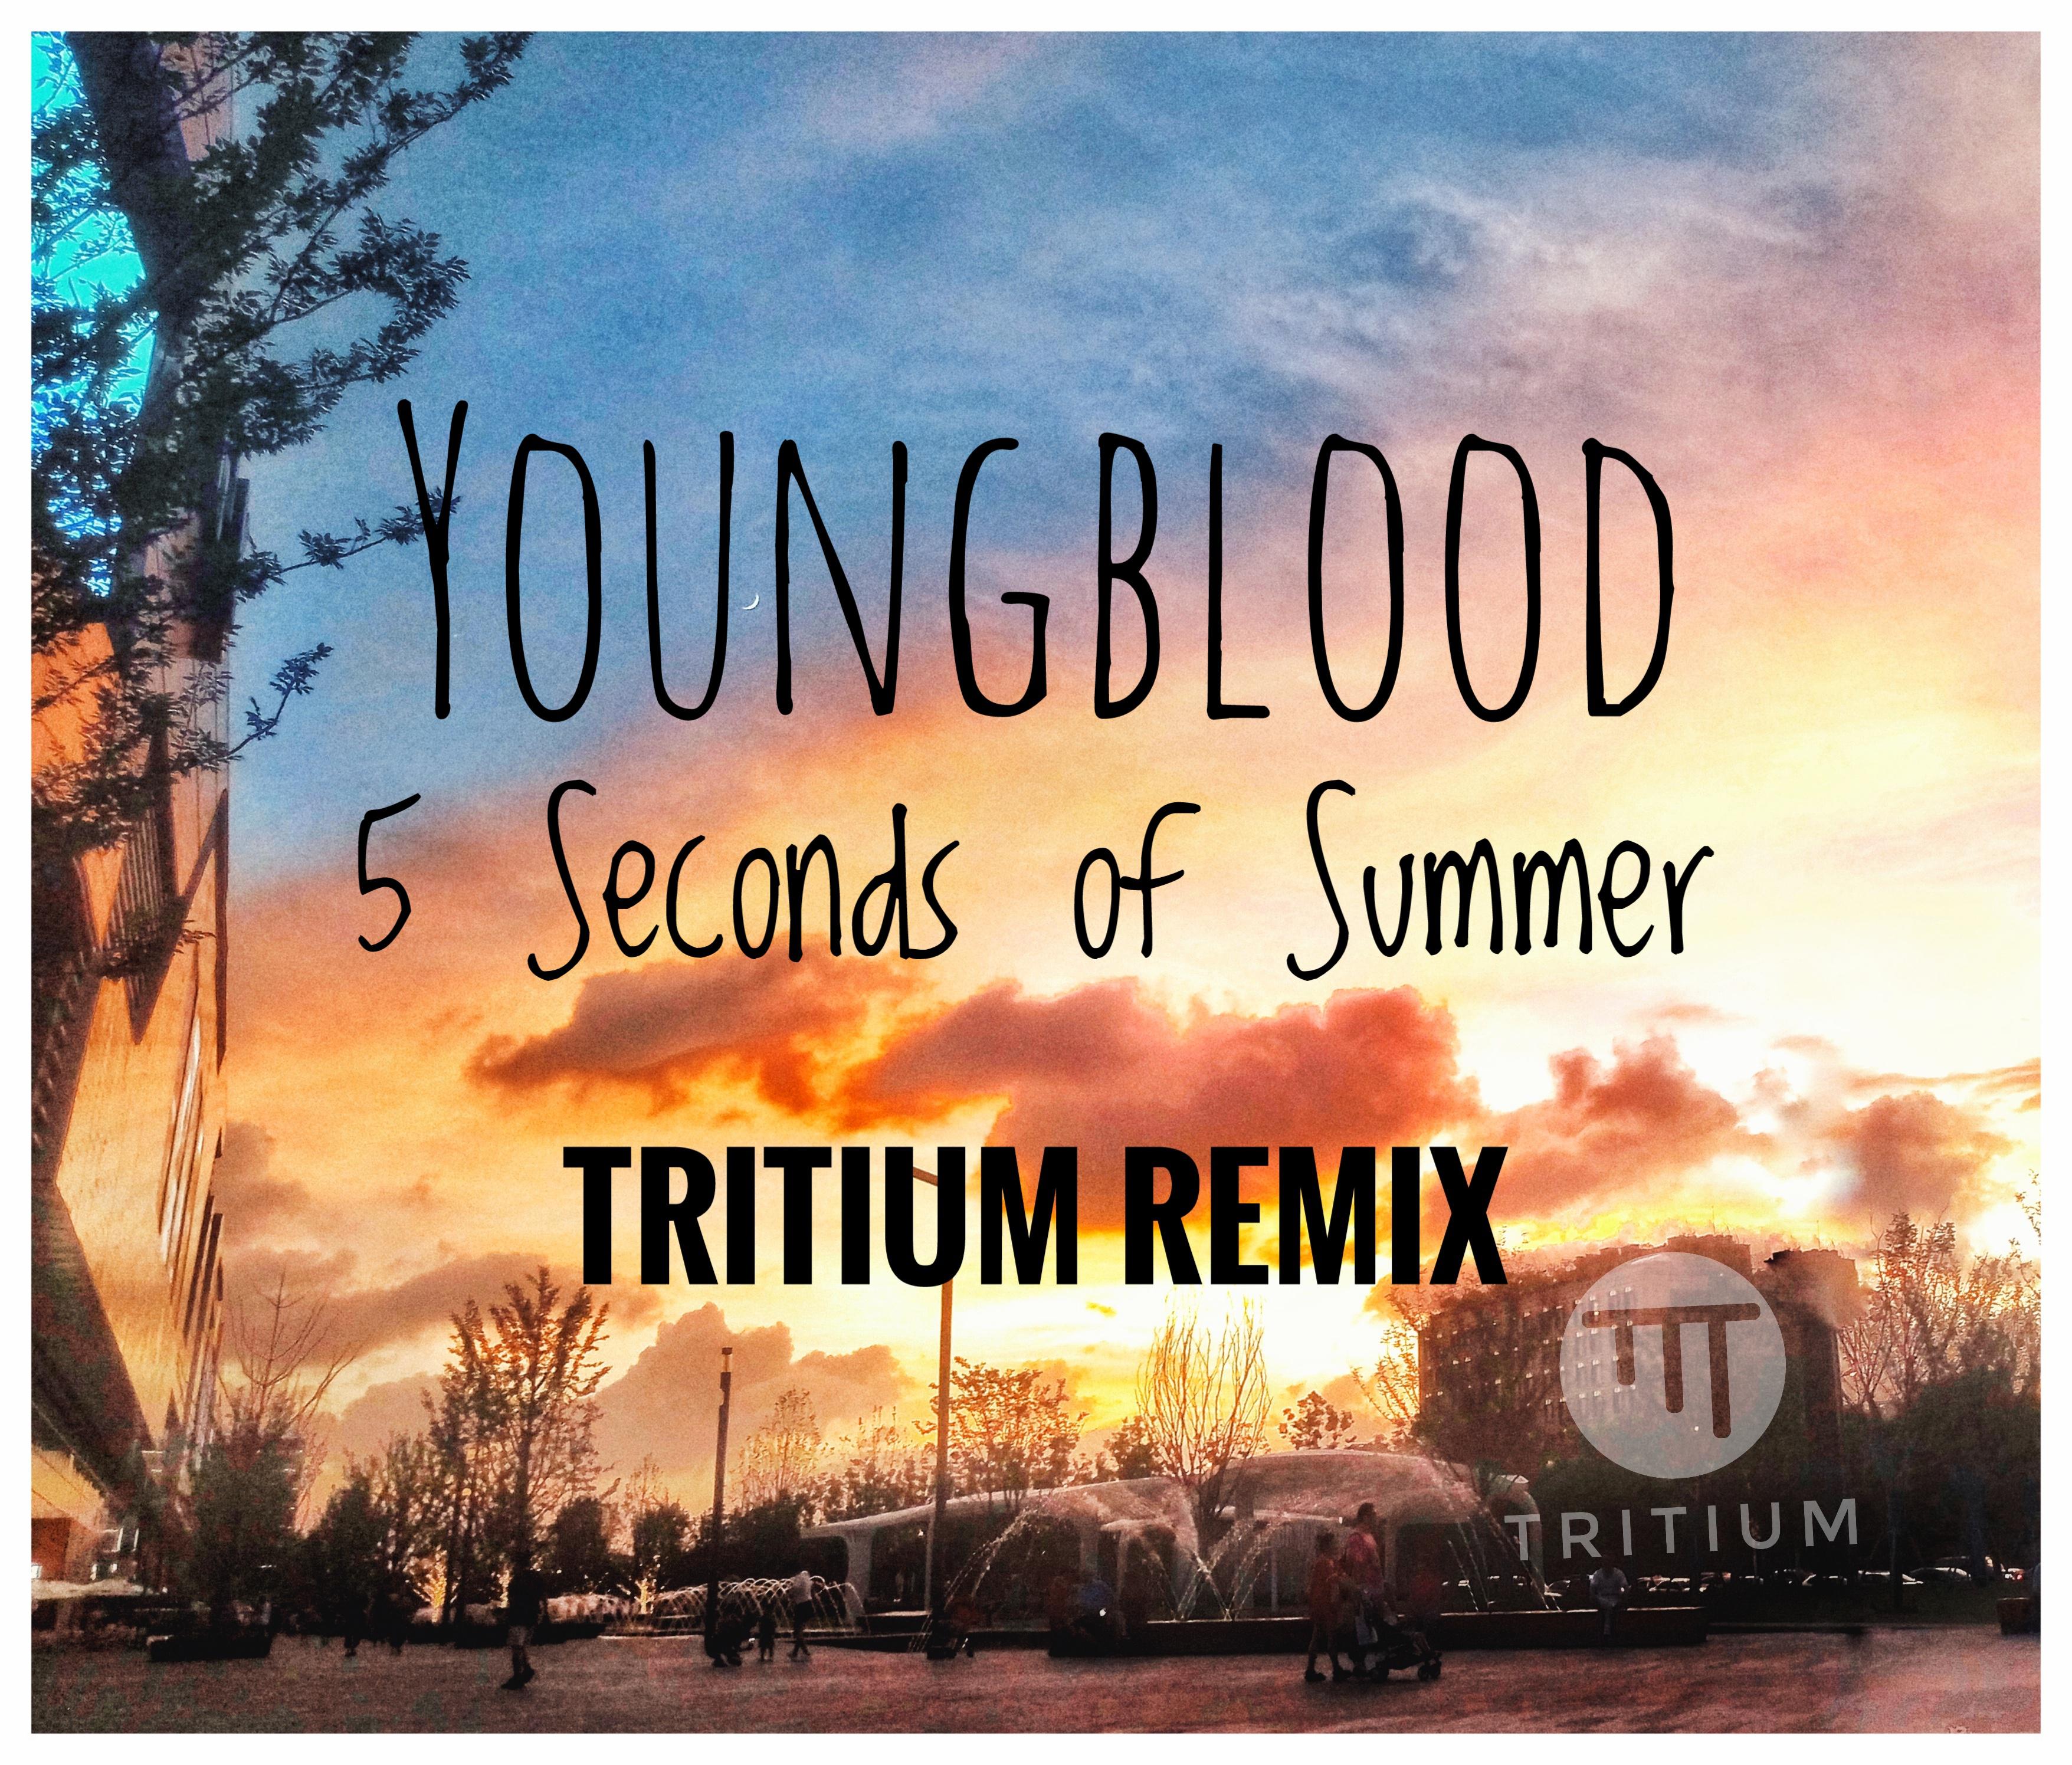 5 seconds of summer-youngblood(tritium remix)